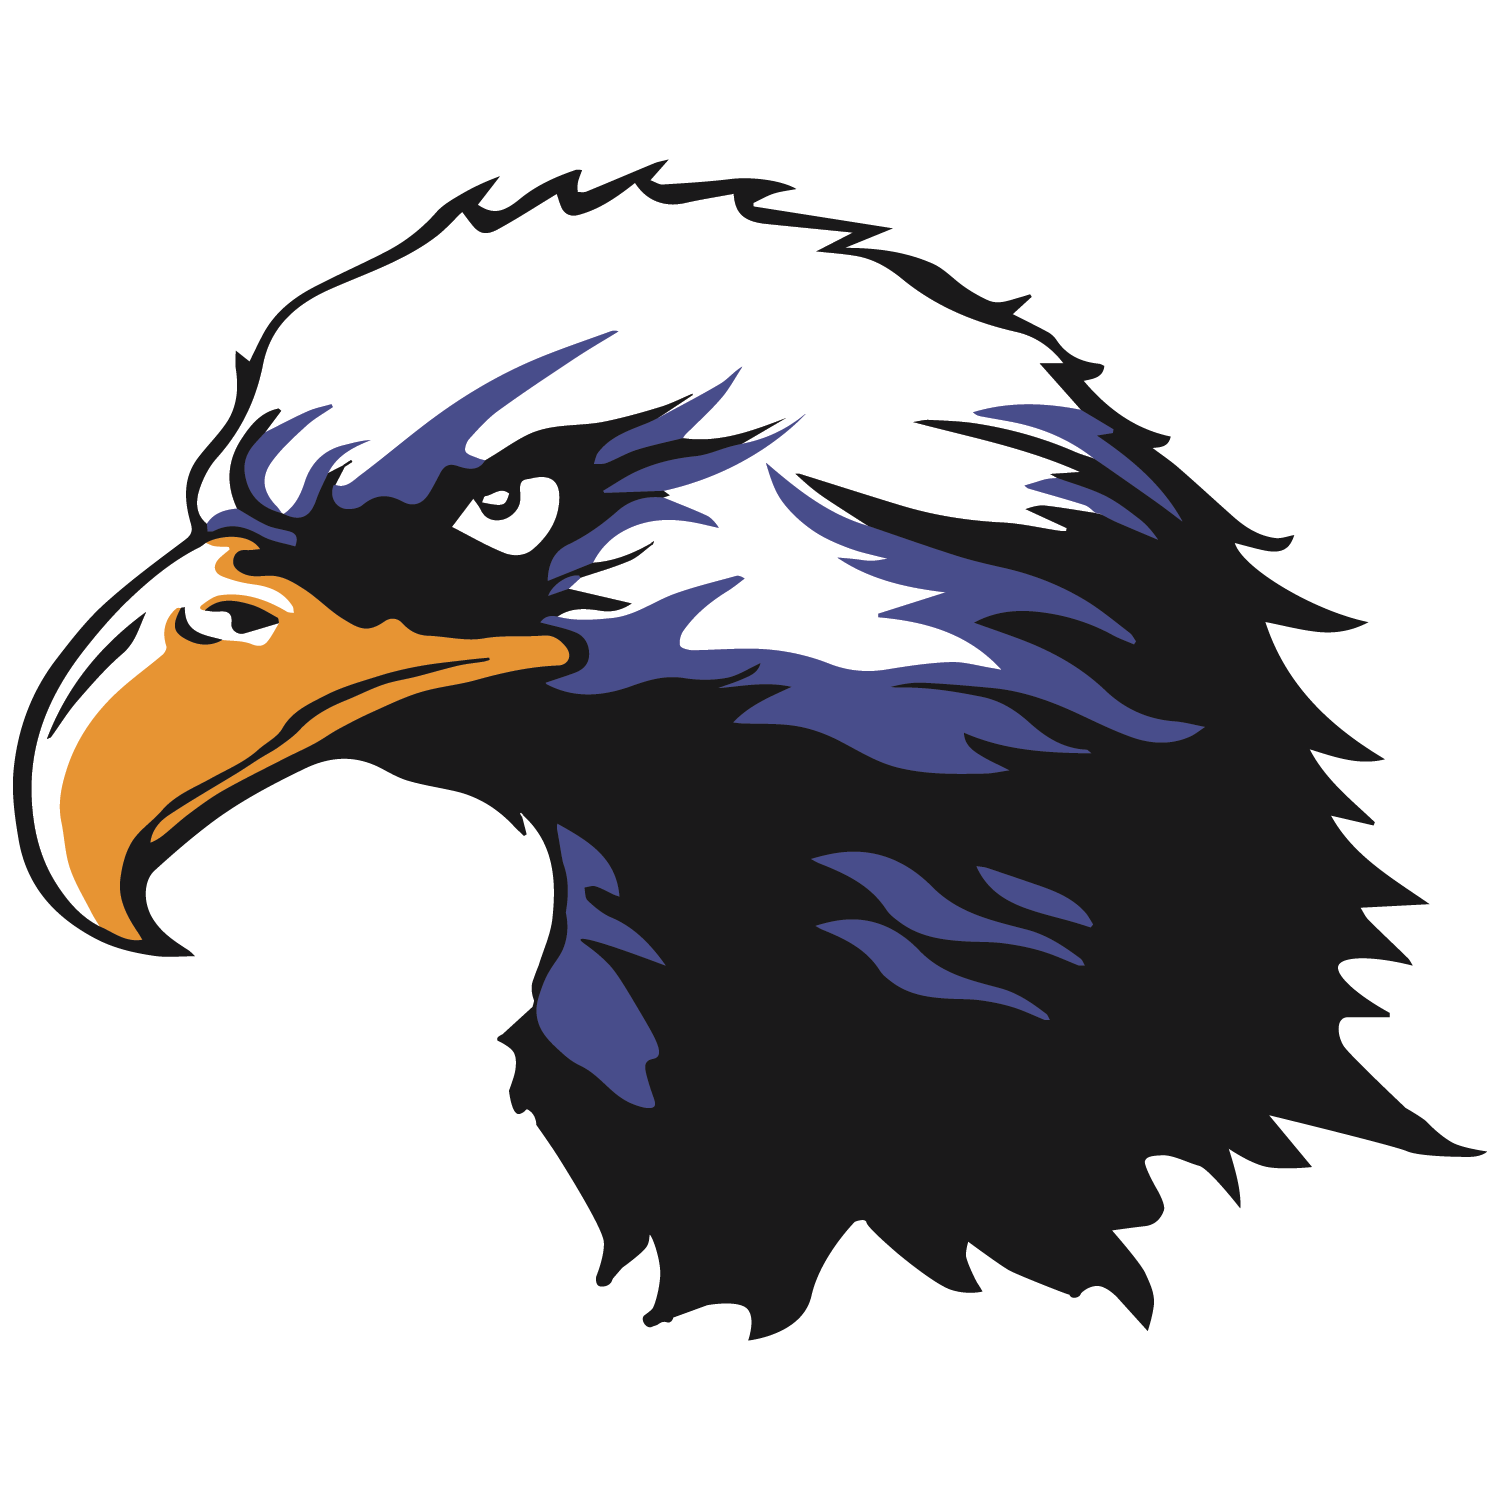 East View Eagle with a orange beak, purple and black streaks. 